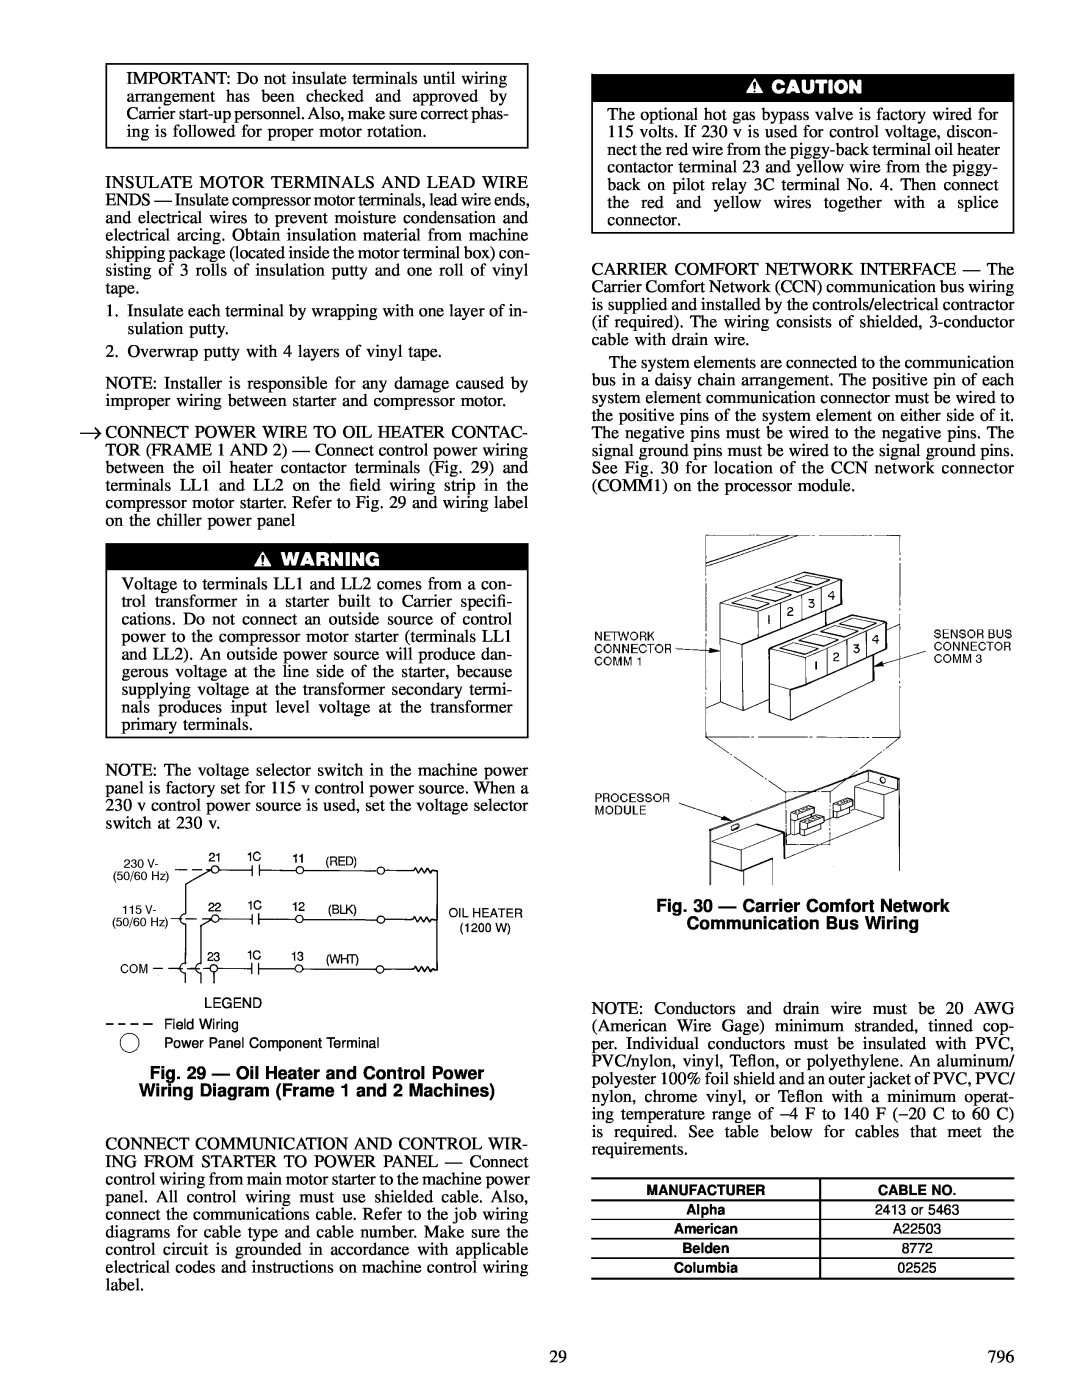 Carrier 23 XL installation instructions Ð Carrier Comfort Network, Communication Bus Wiring 